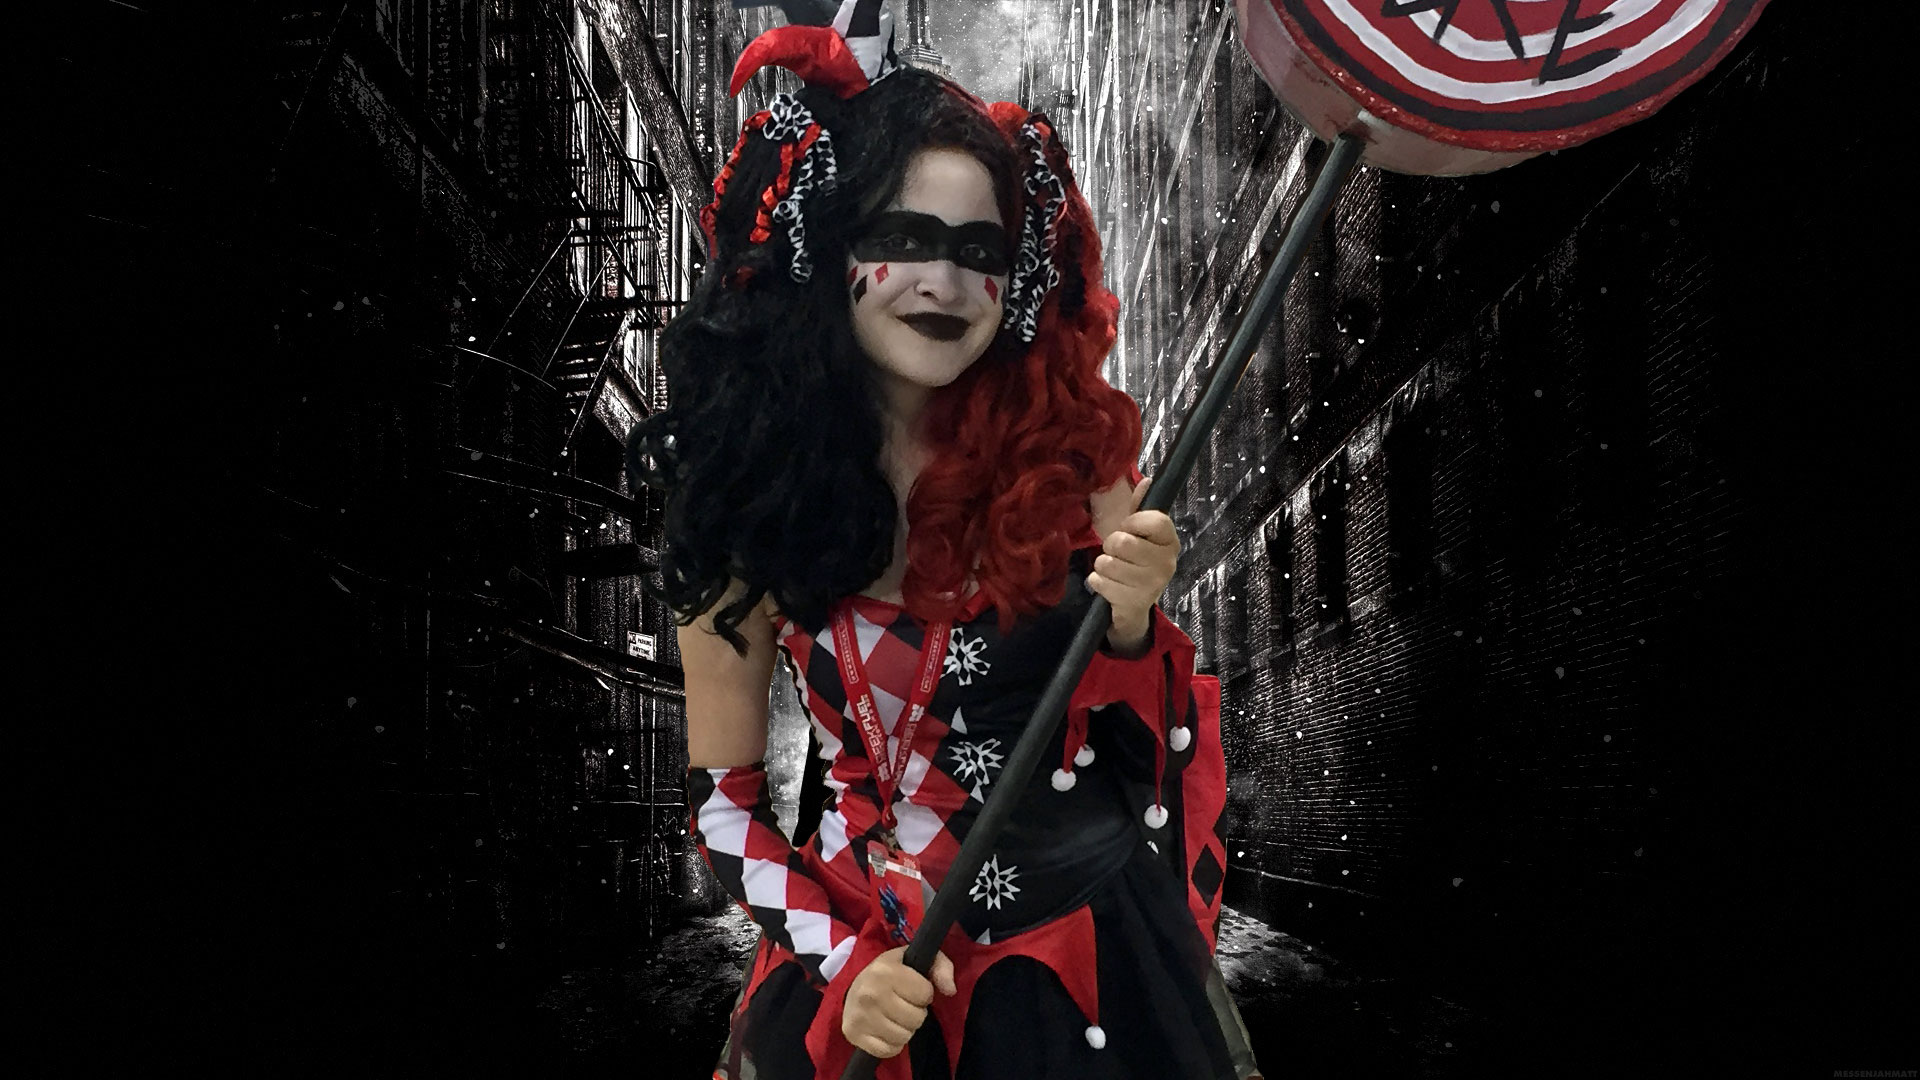 Harley-Quinn-cosplay